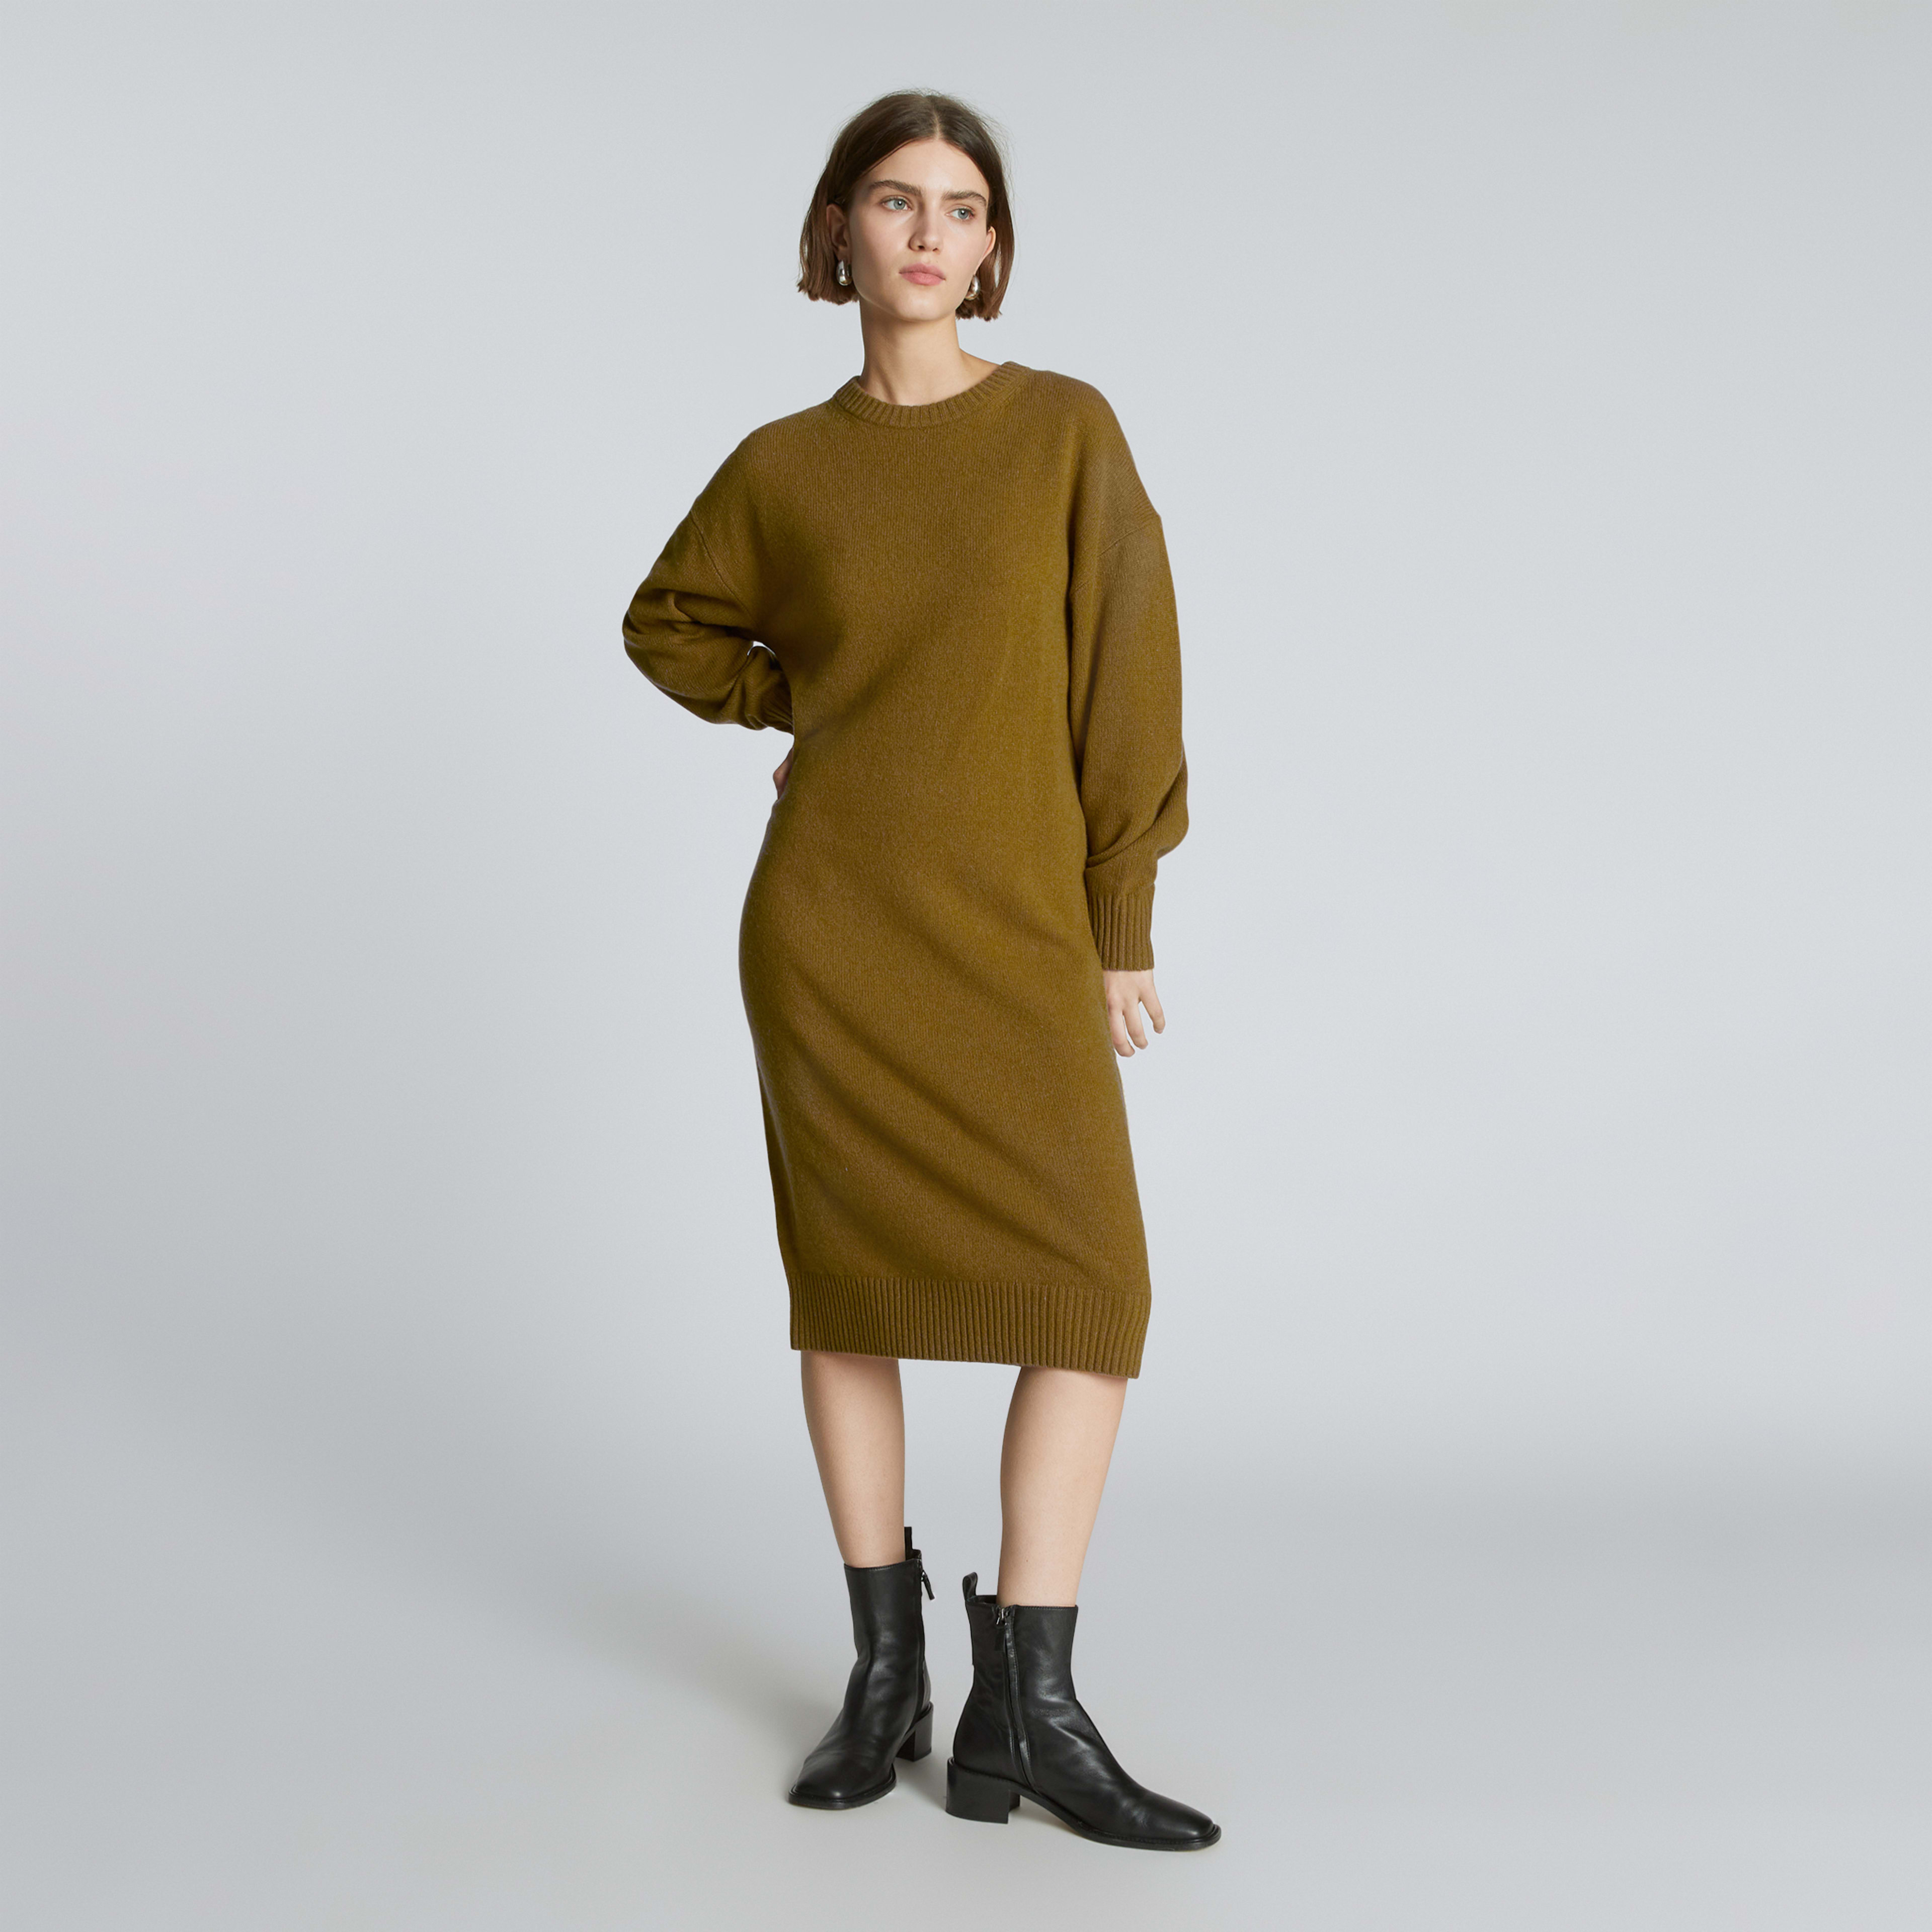 Women's Cashmere Midi Dress by Everlane in Tapenade, Size XXS